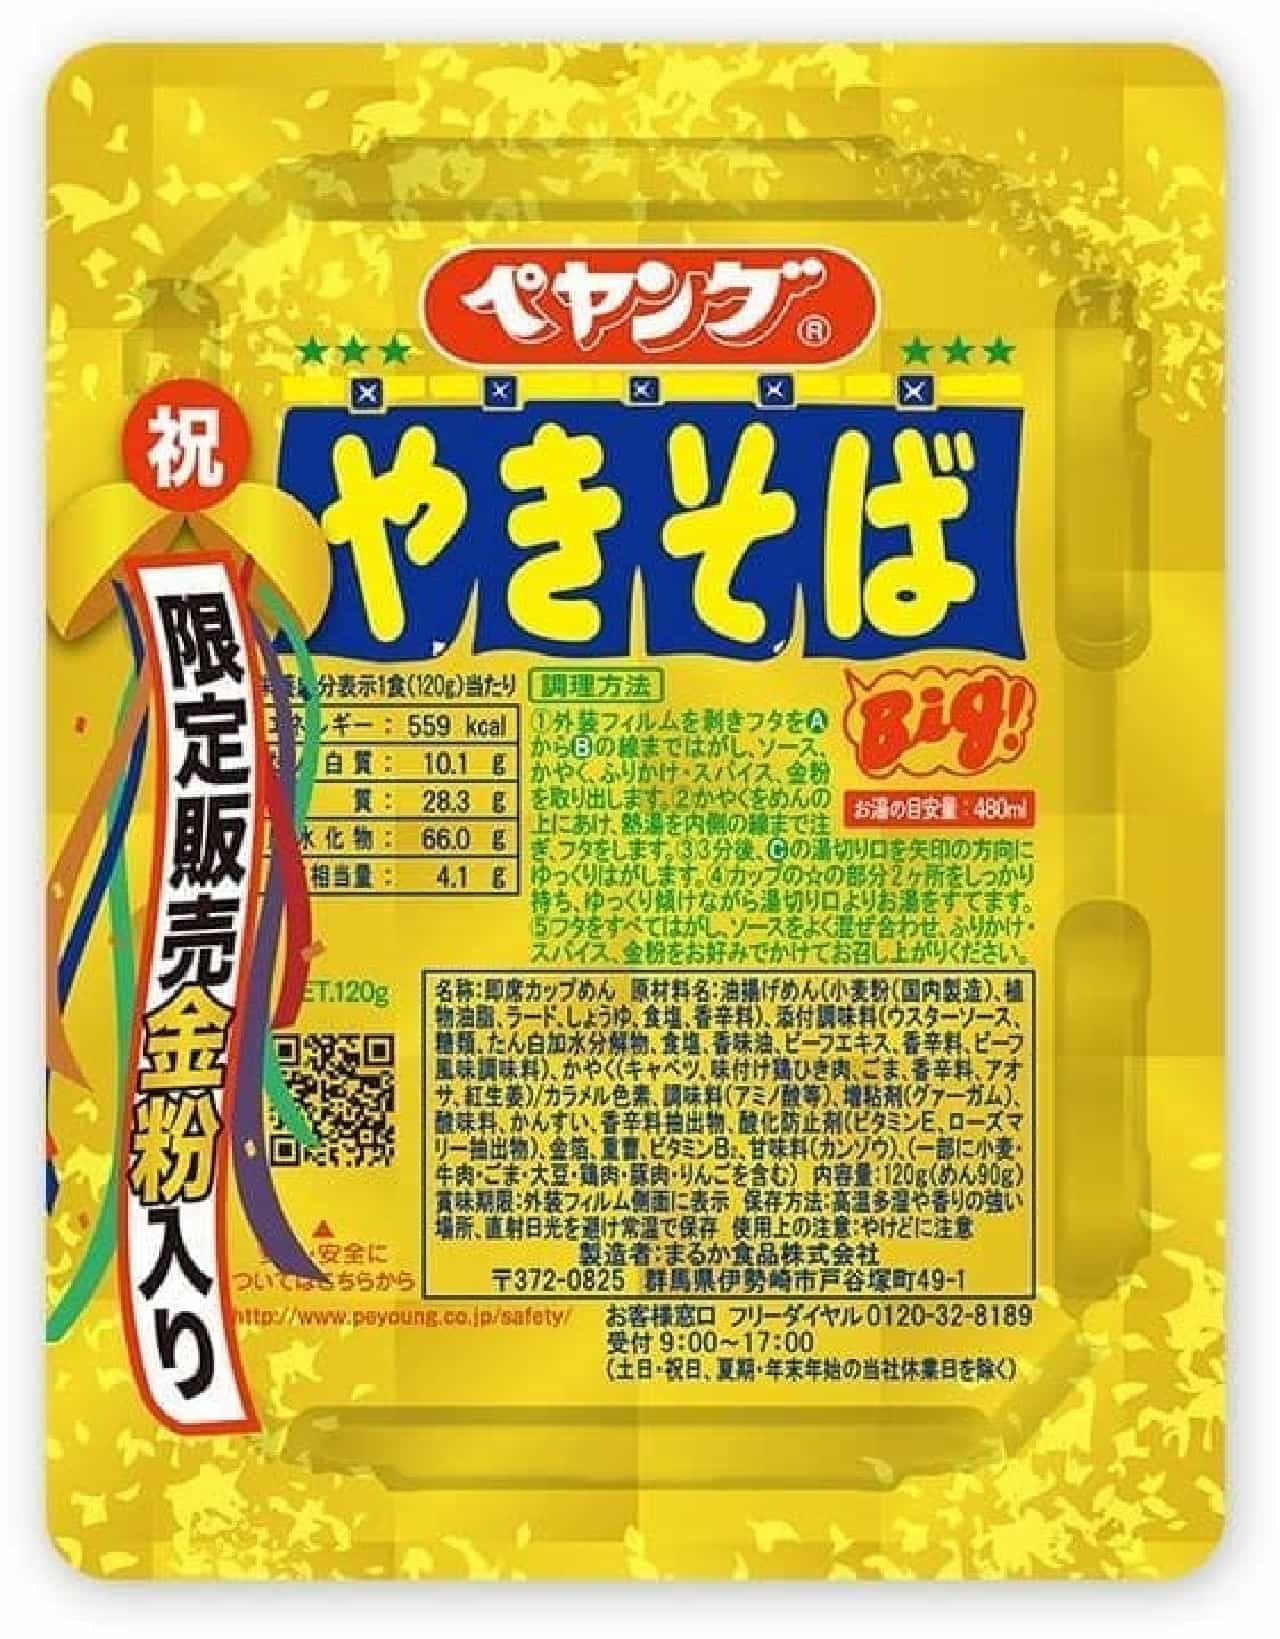 Maruka Foods "Peyoung Sauce Yakisoba with Gold Powder"